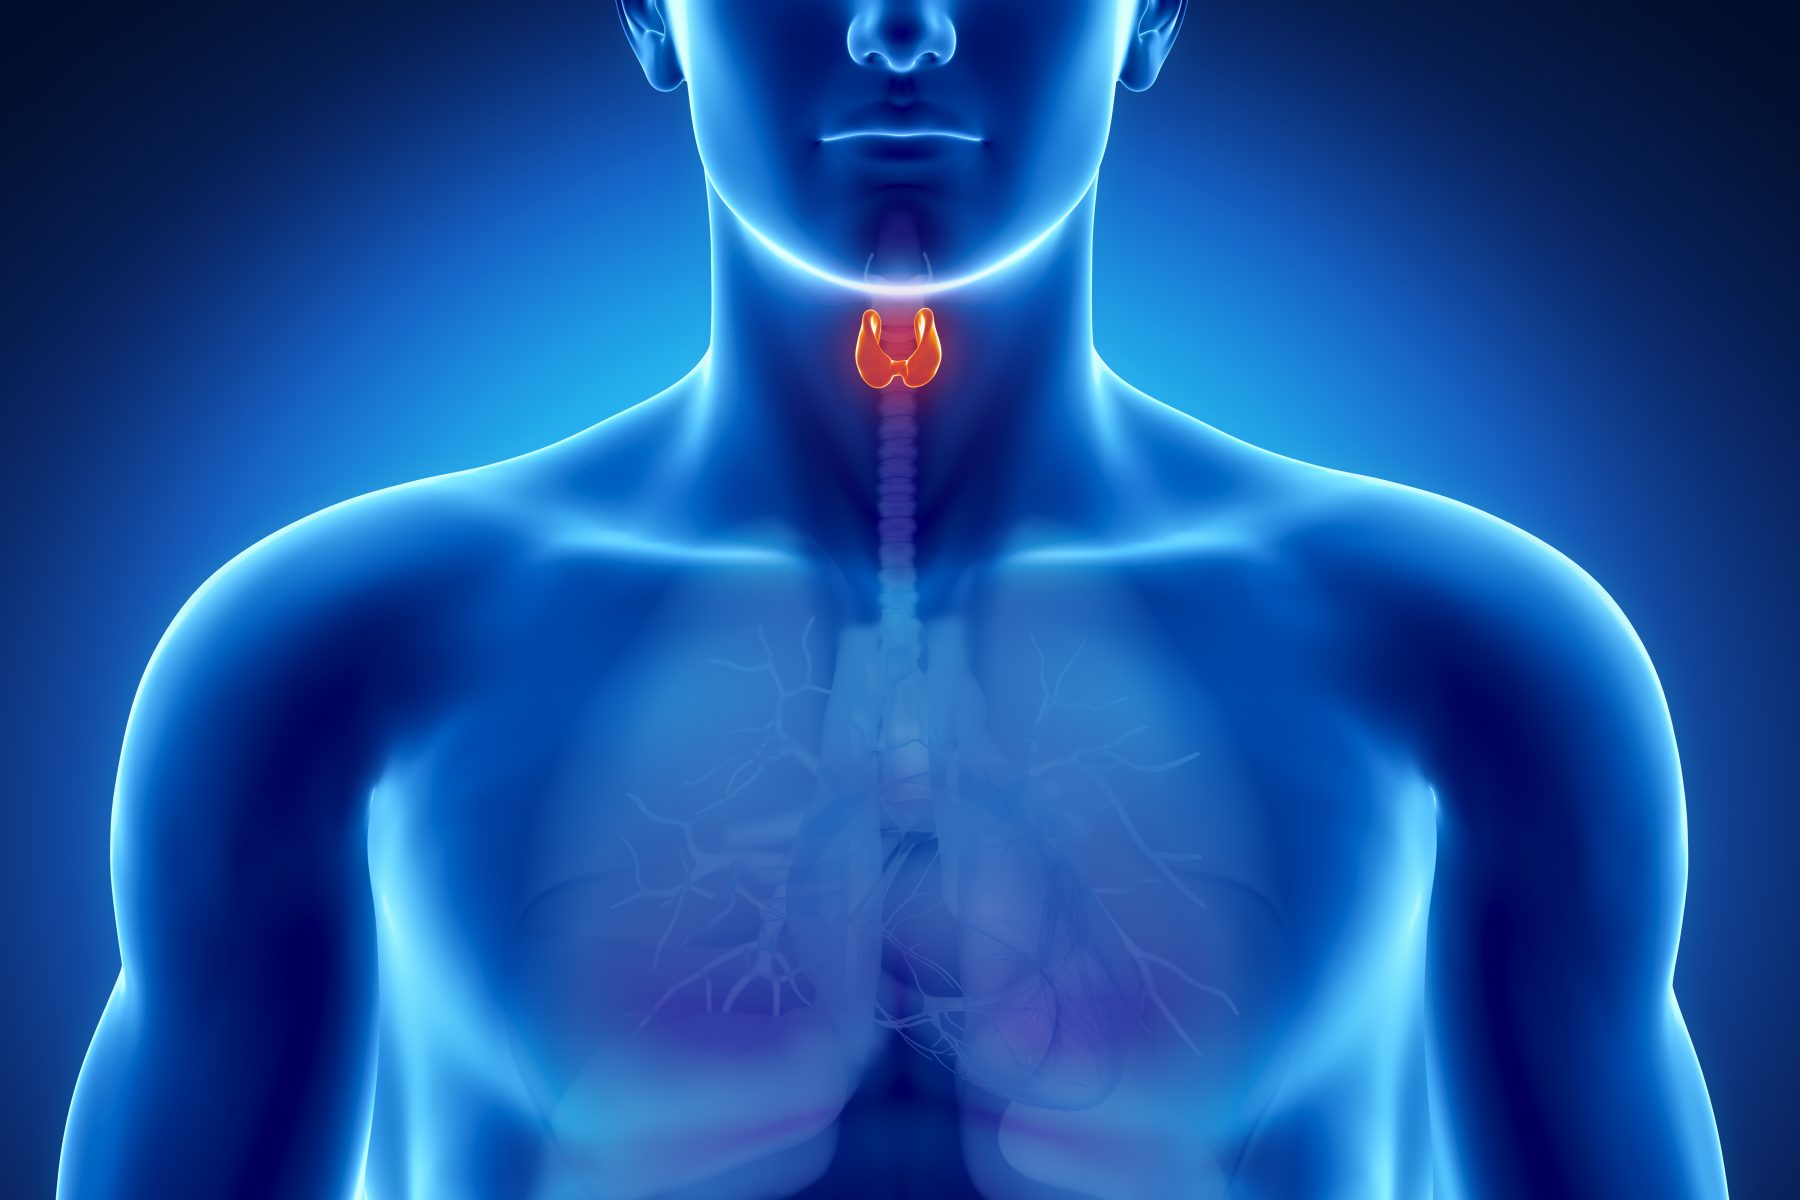 Male thyroid anatomy in computer illustration